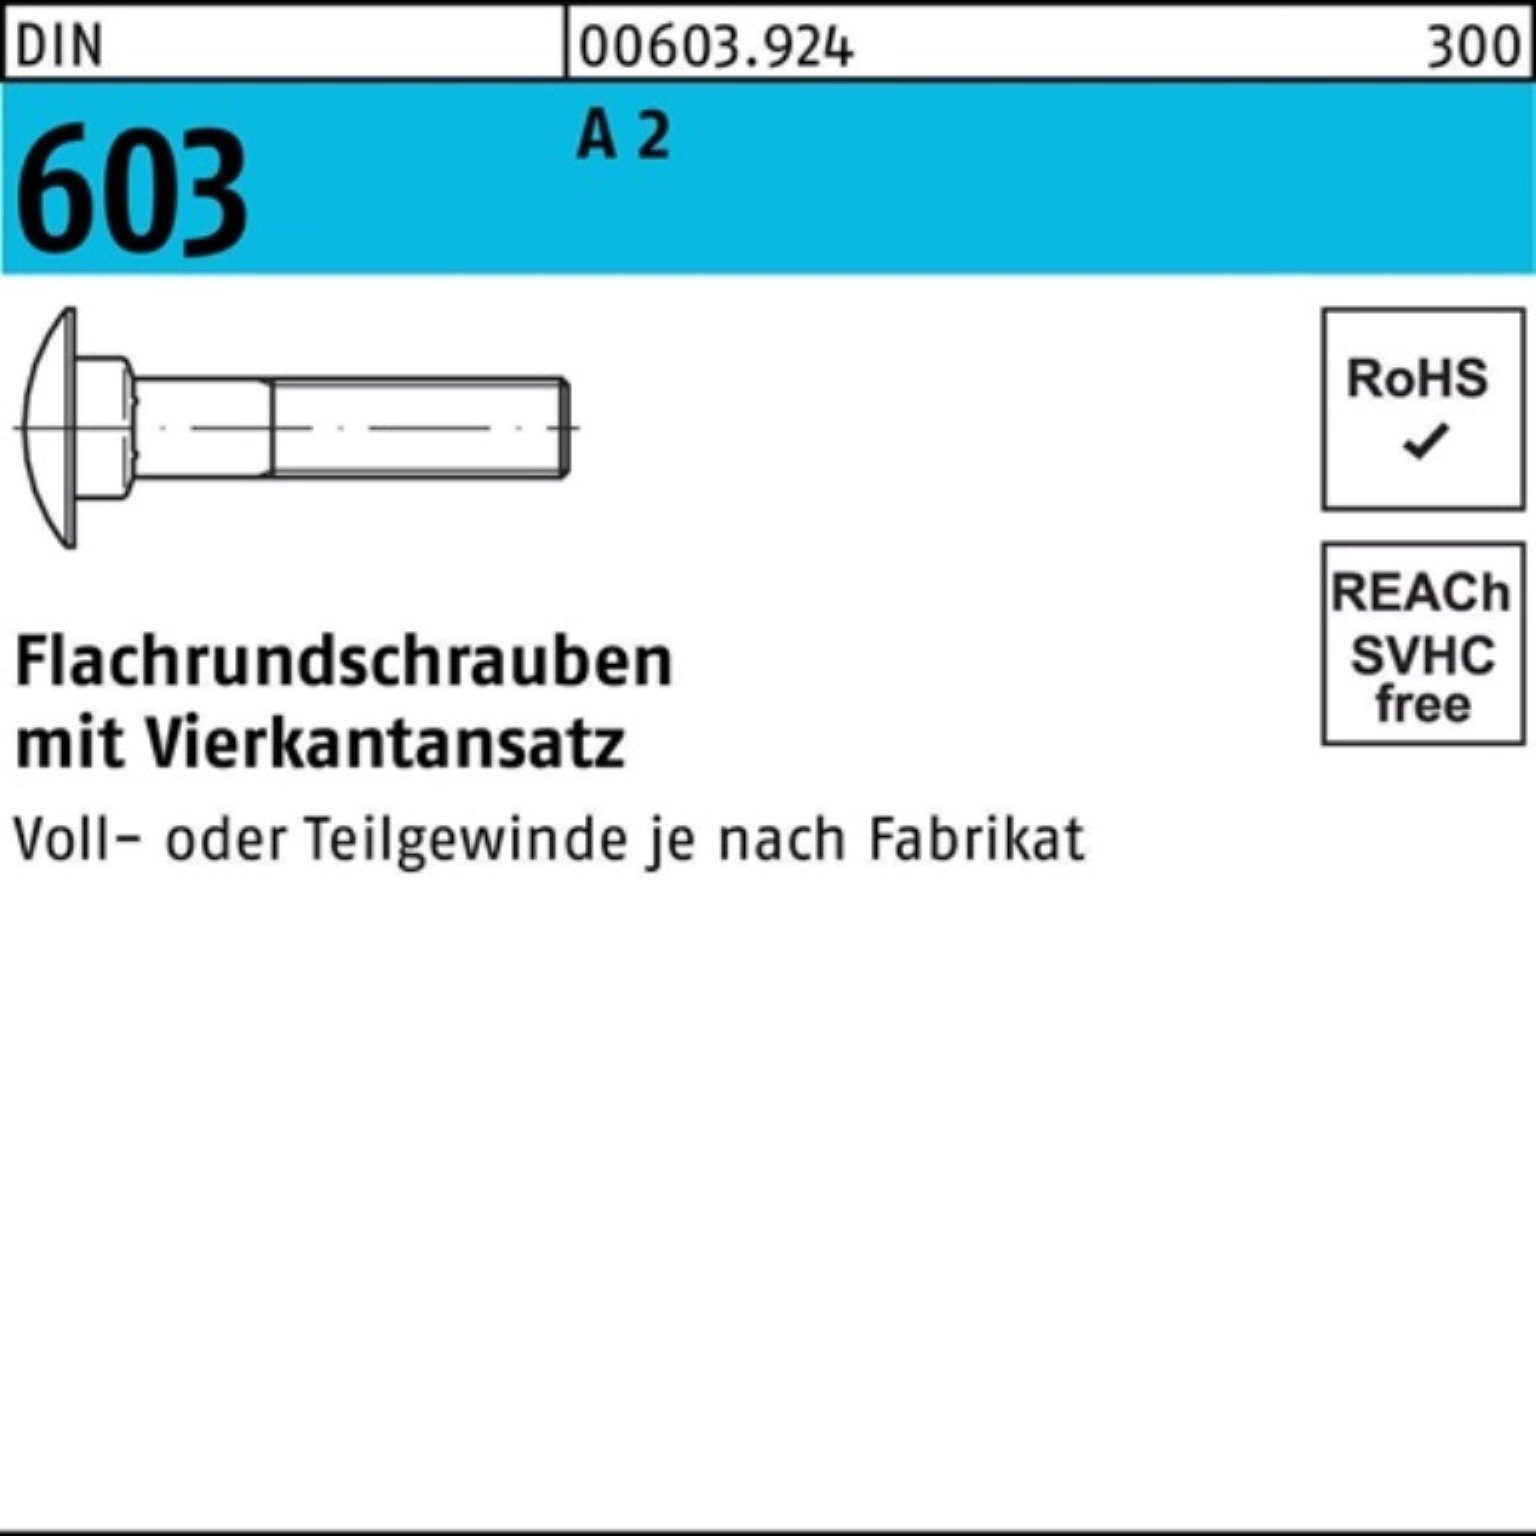 St Reyher Vierkantansatz Pack Flachrundschraube 2 50 M8x 100er 200 603 DIN A Schraube